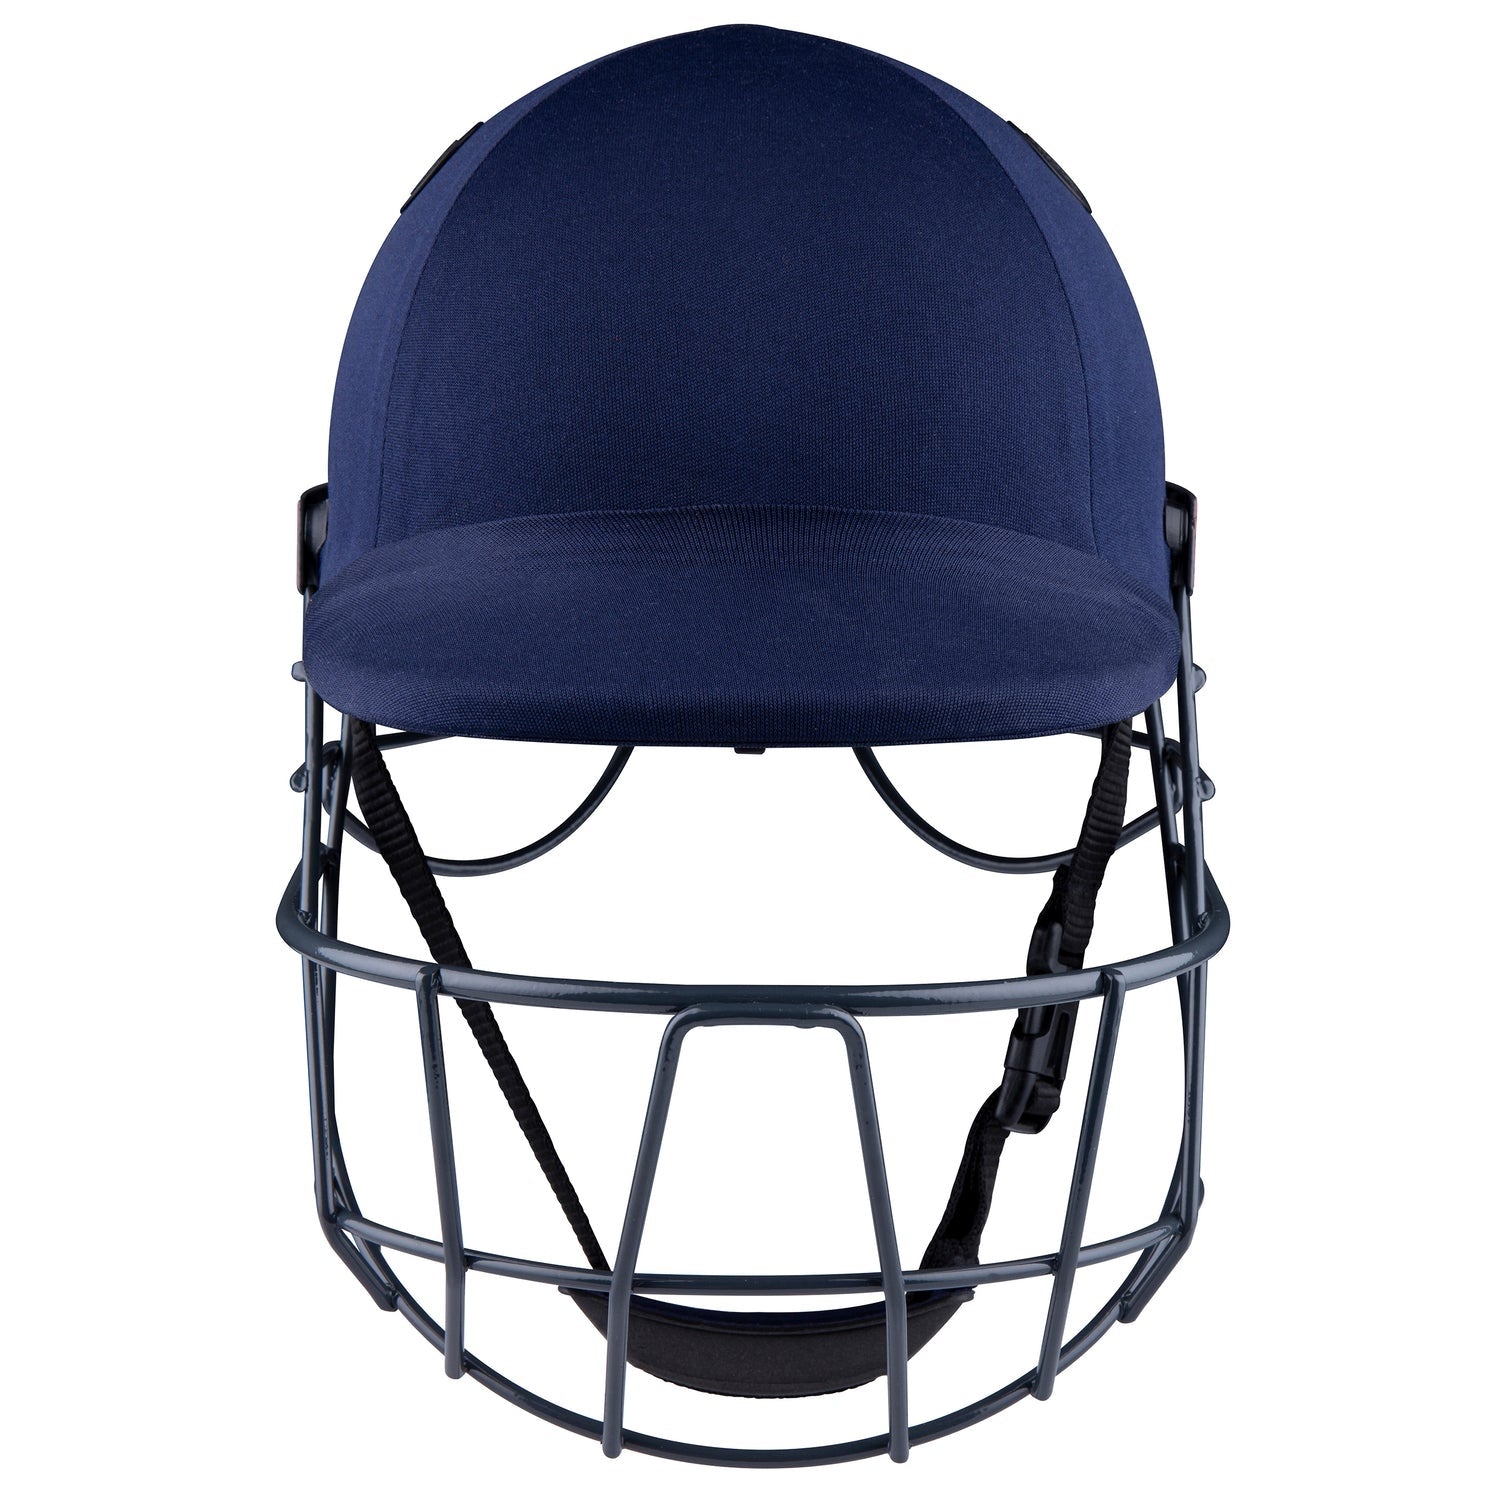 Gray-Nicolls Batting Helmet, Model Ultimate 360, Navy Blue - S, M, L, XL